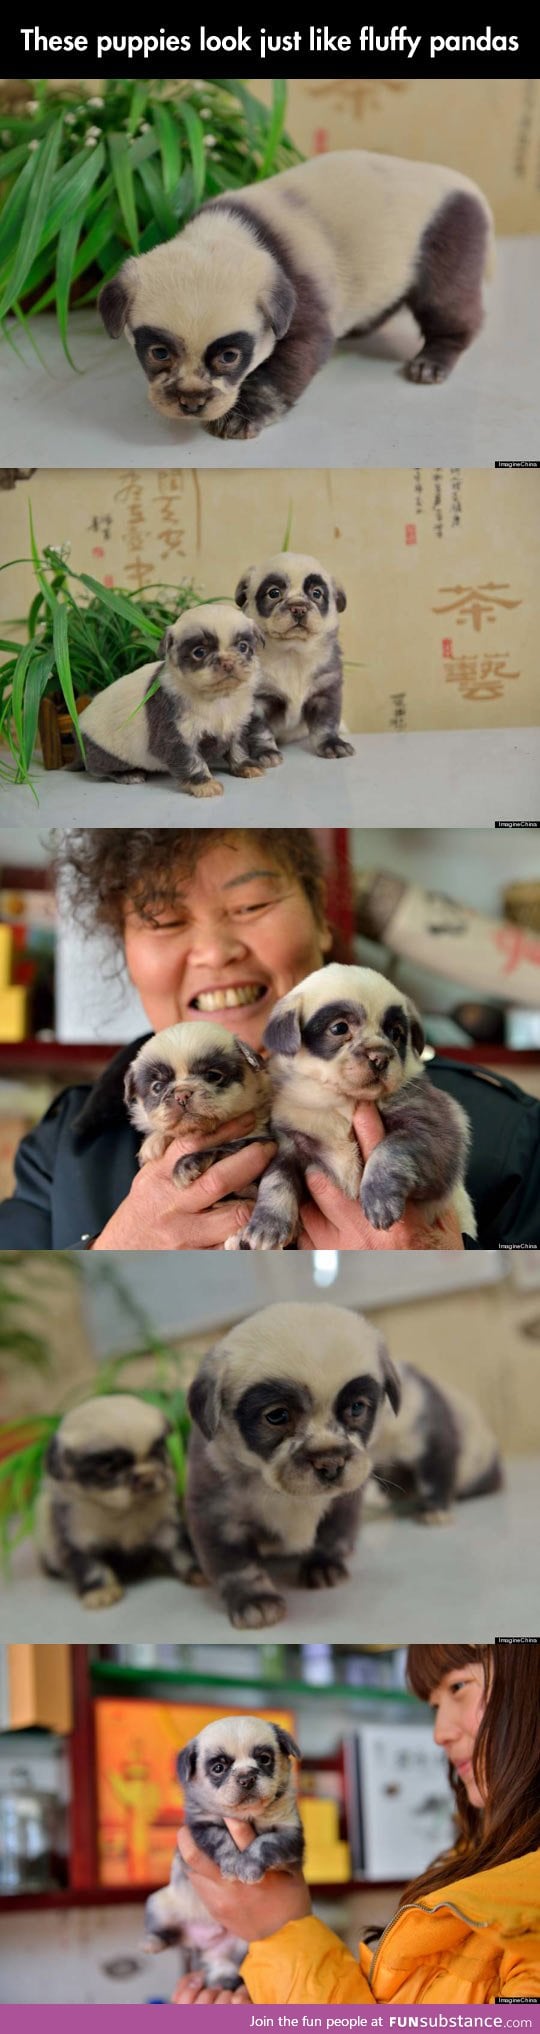 Chinese puppies imitate pandas